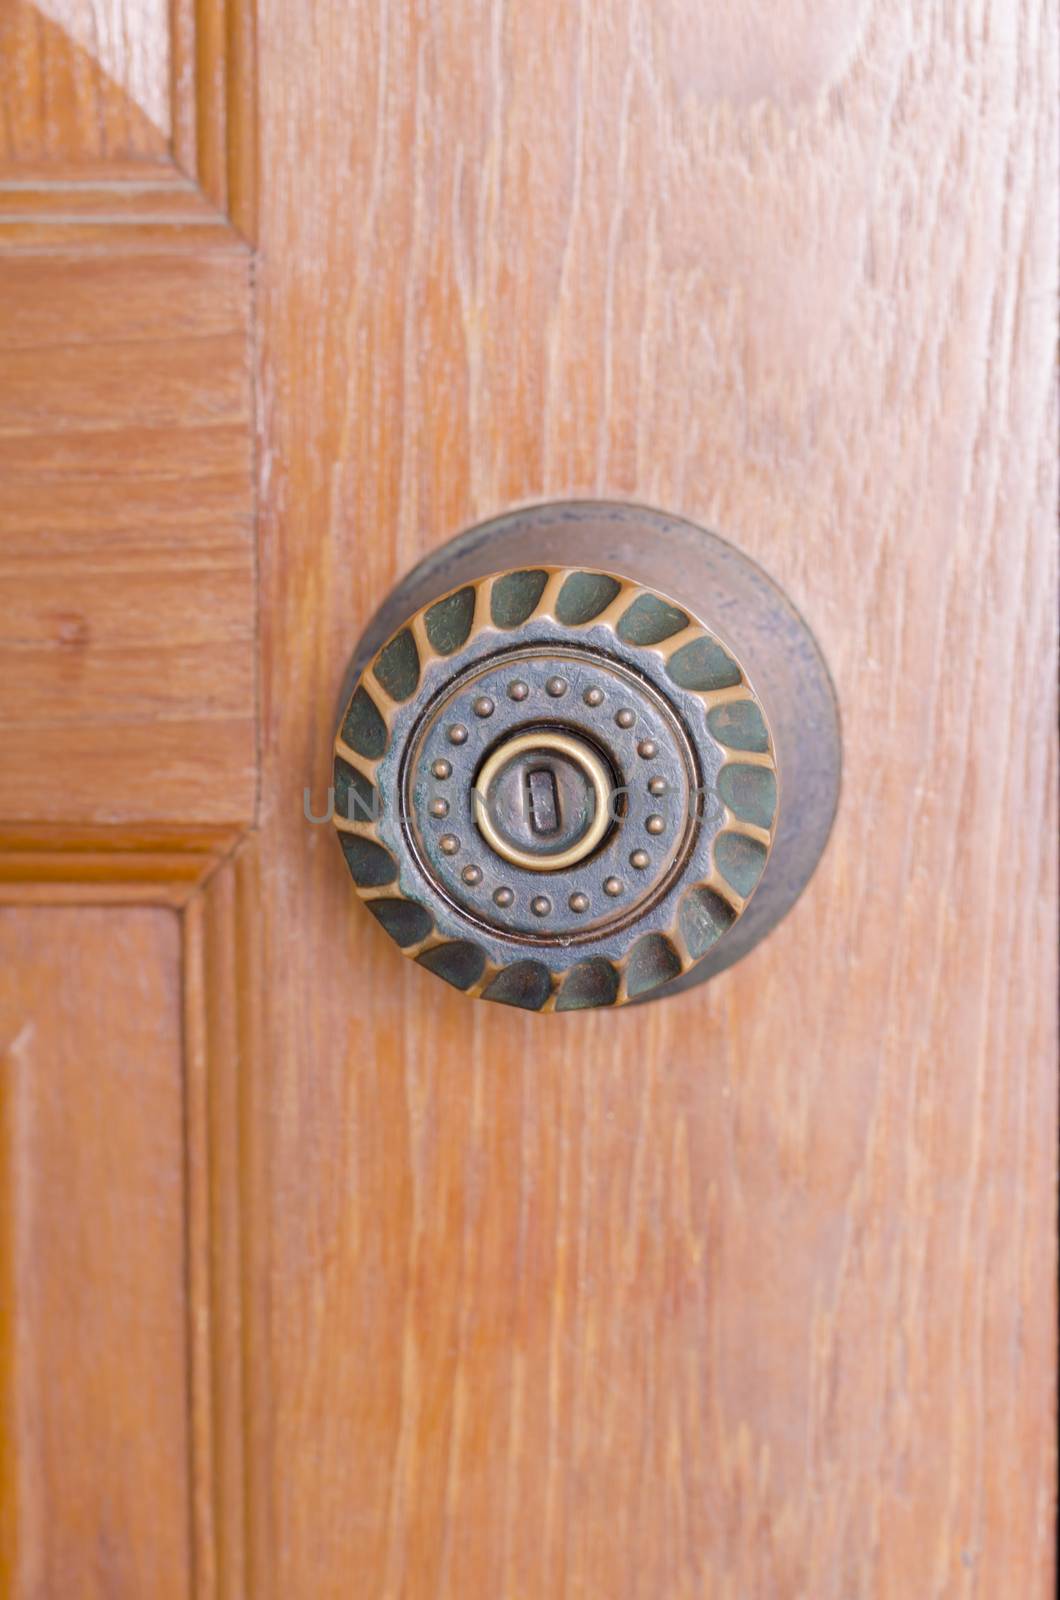 door knob and key hold on wood